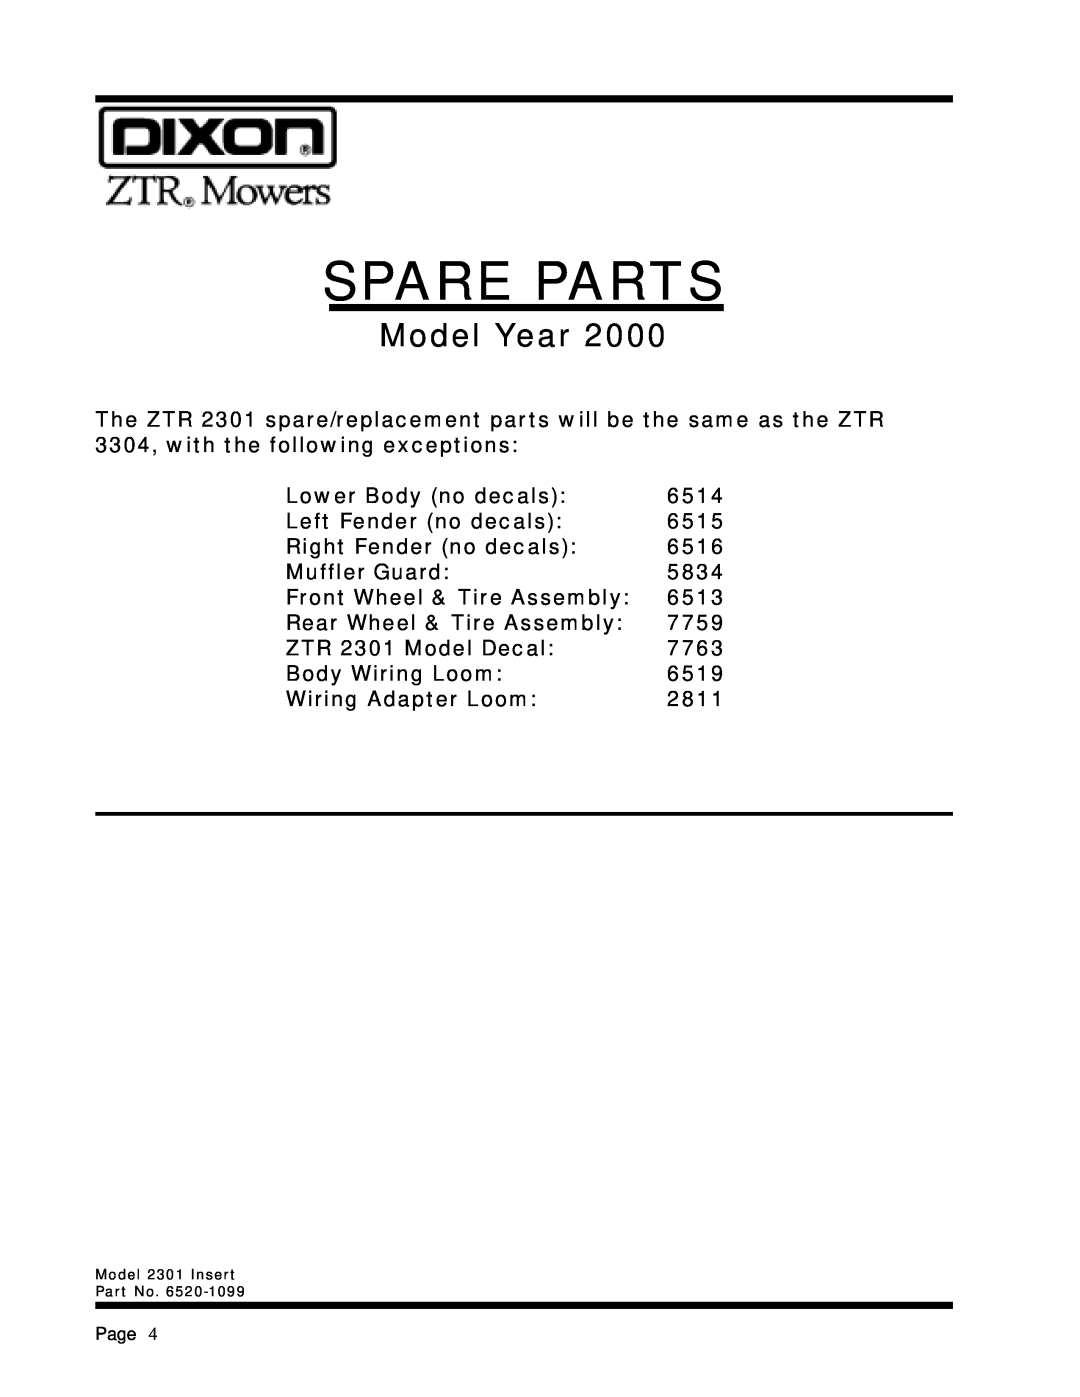 Dixon ZTR 2301 manual Model Year, Spare Parts 